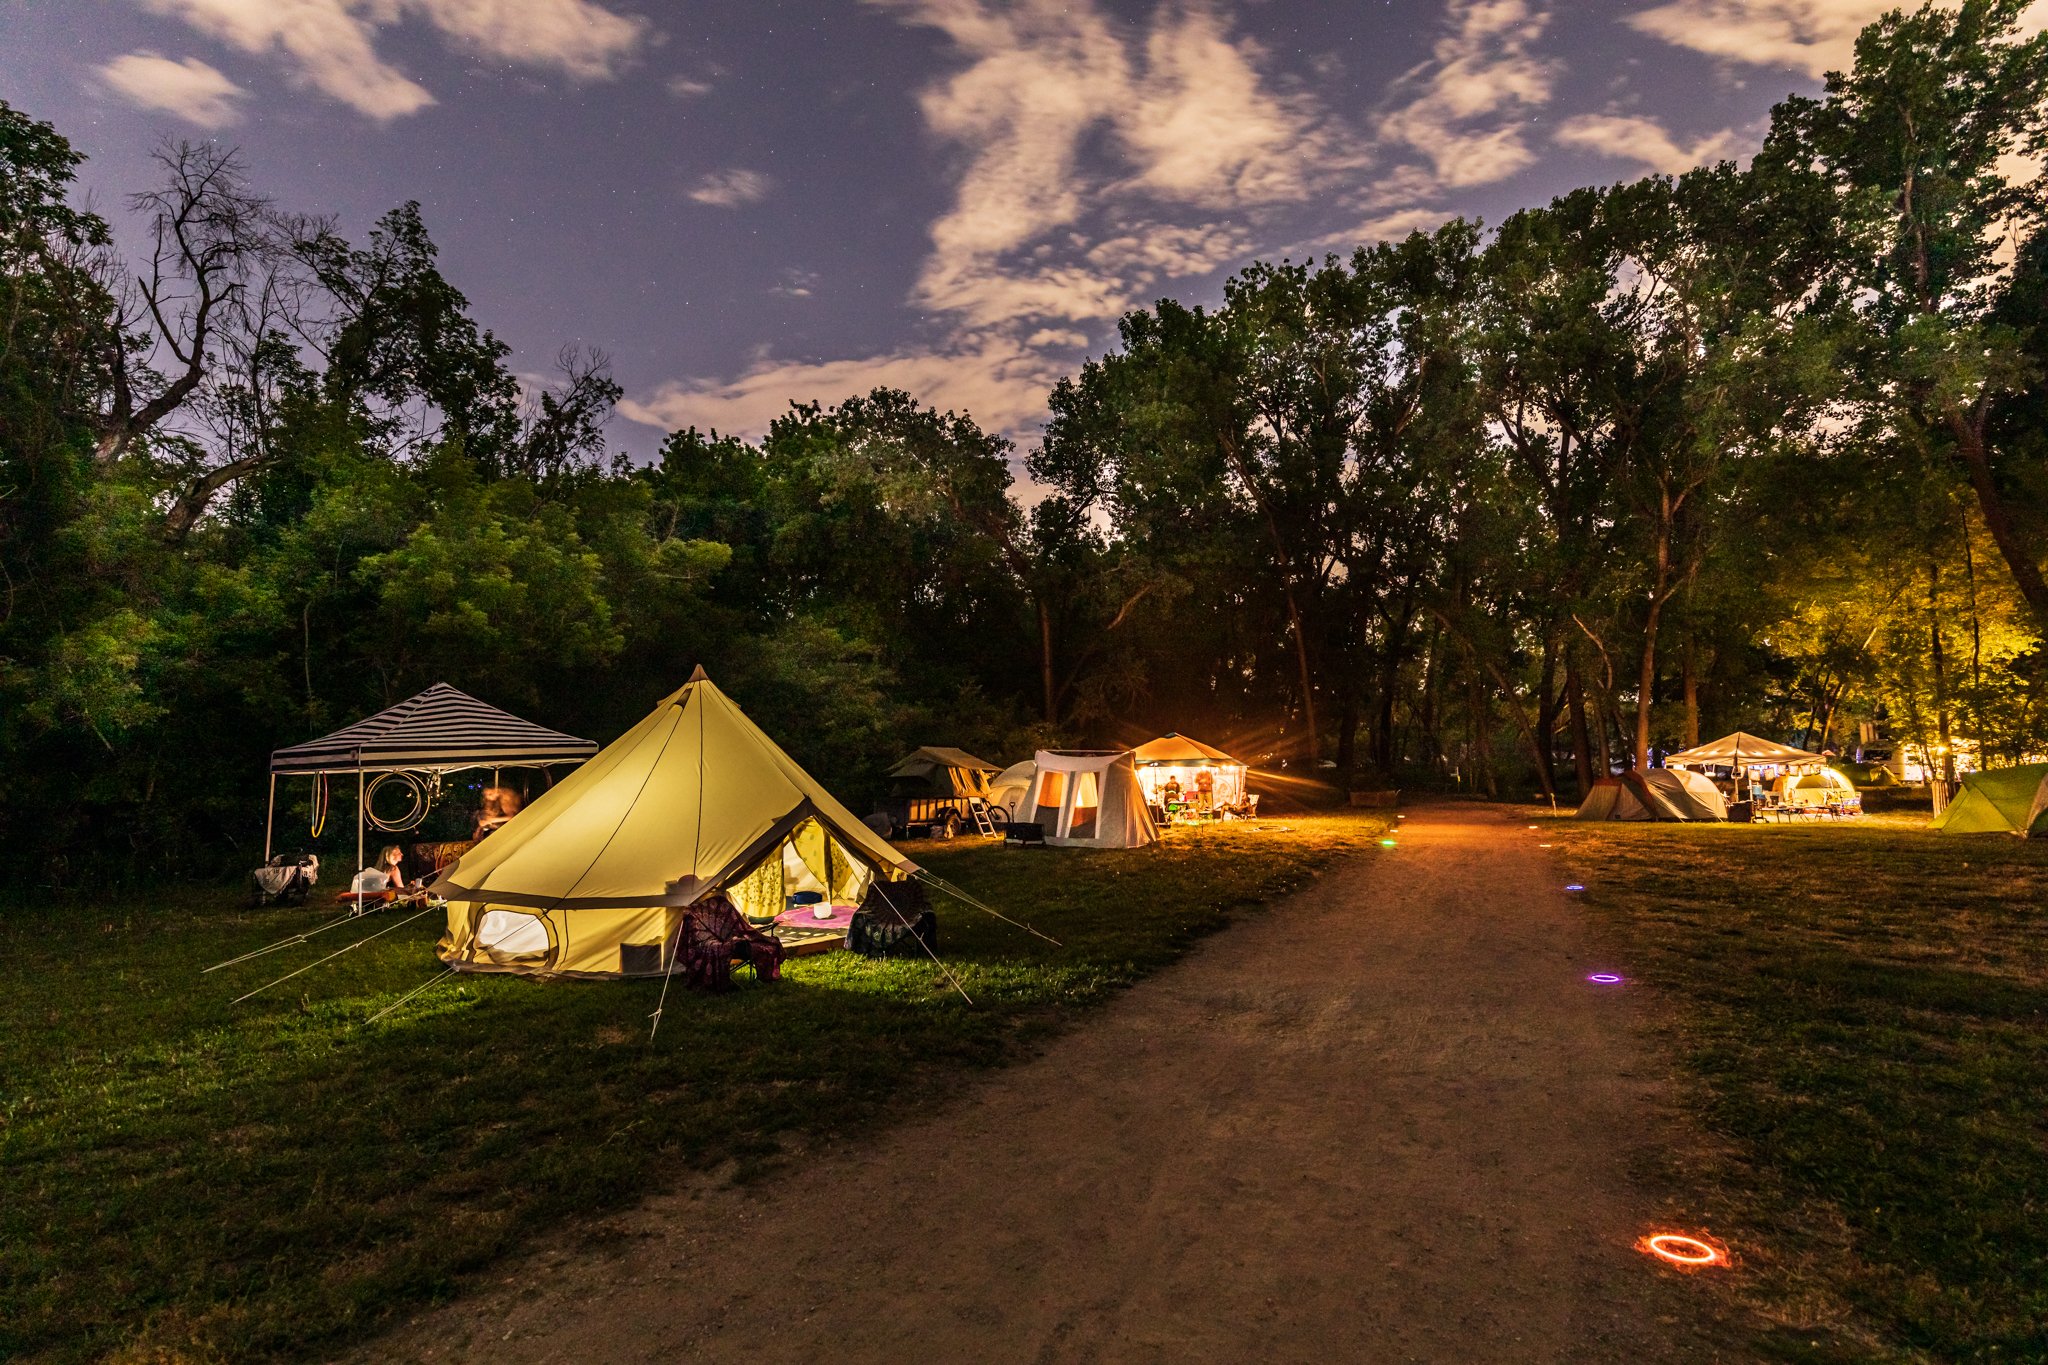 Camping at OMF2022. Photo by Sam Crump